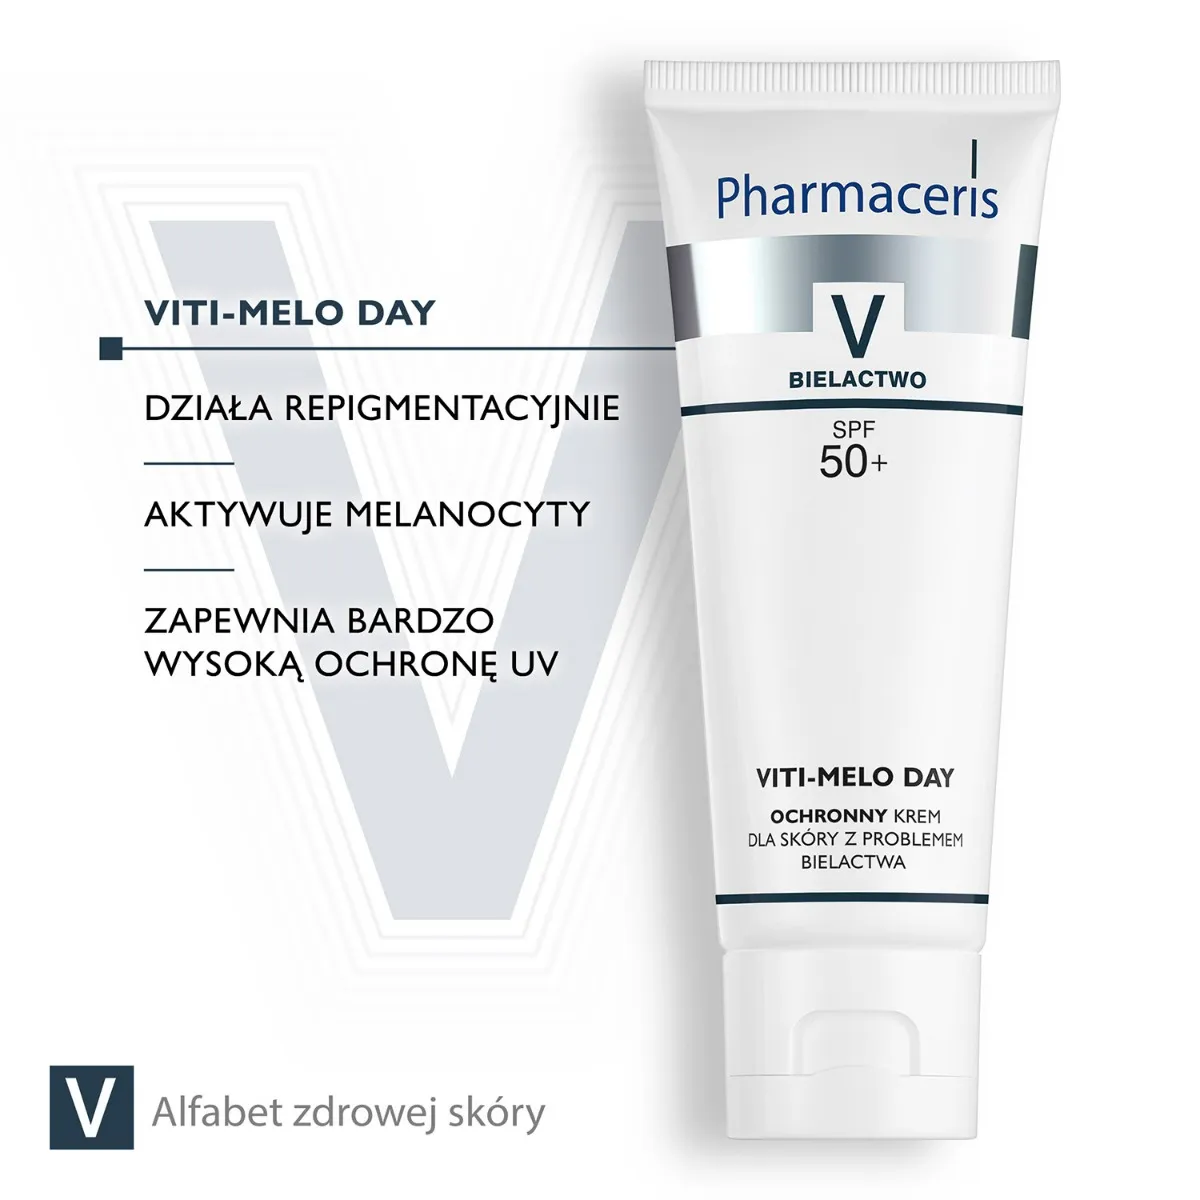 Pharmaceris V Viti-Melo Day, ochronny krem dla skóry z problemami bielactwa do twarzy i ciała na dzień, SPF 50, 75 ml 